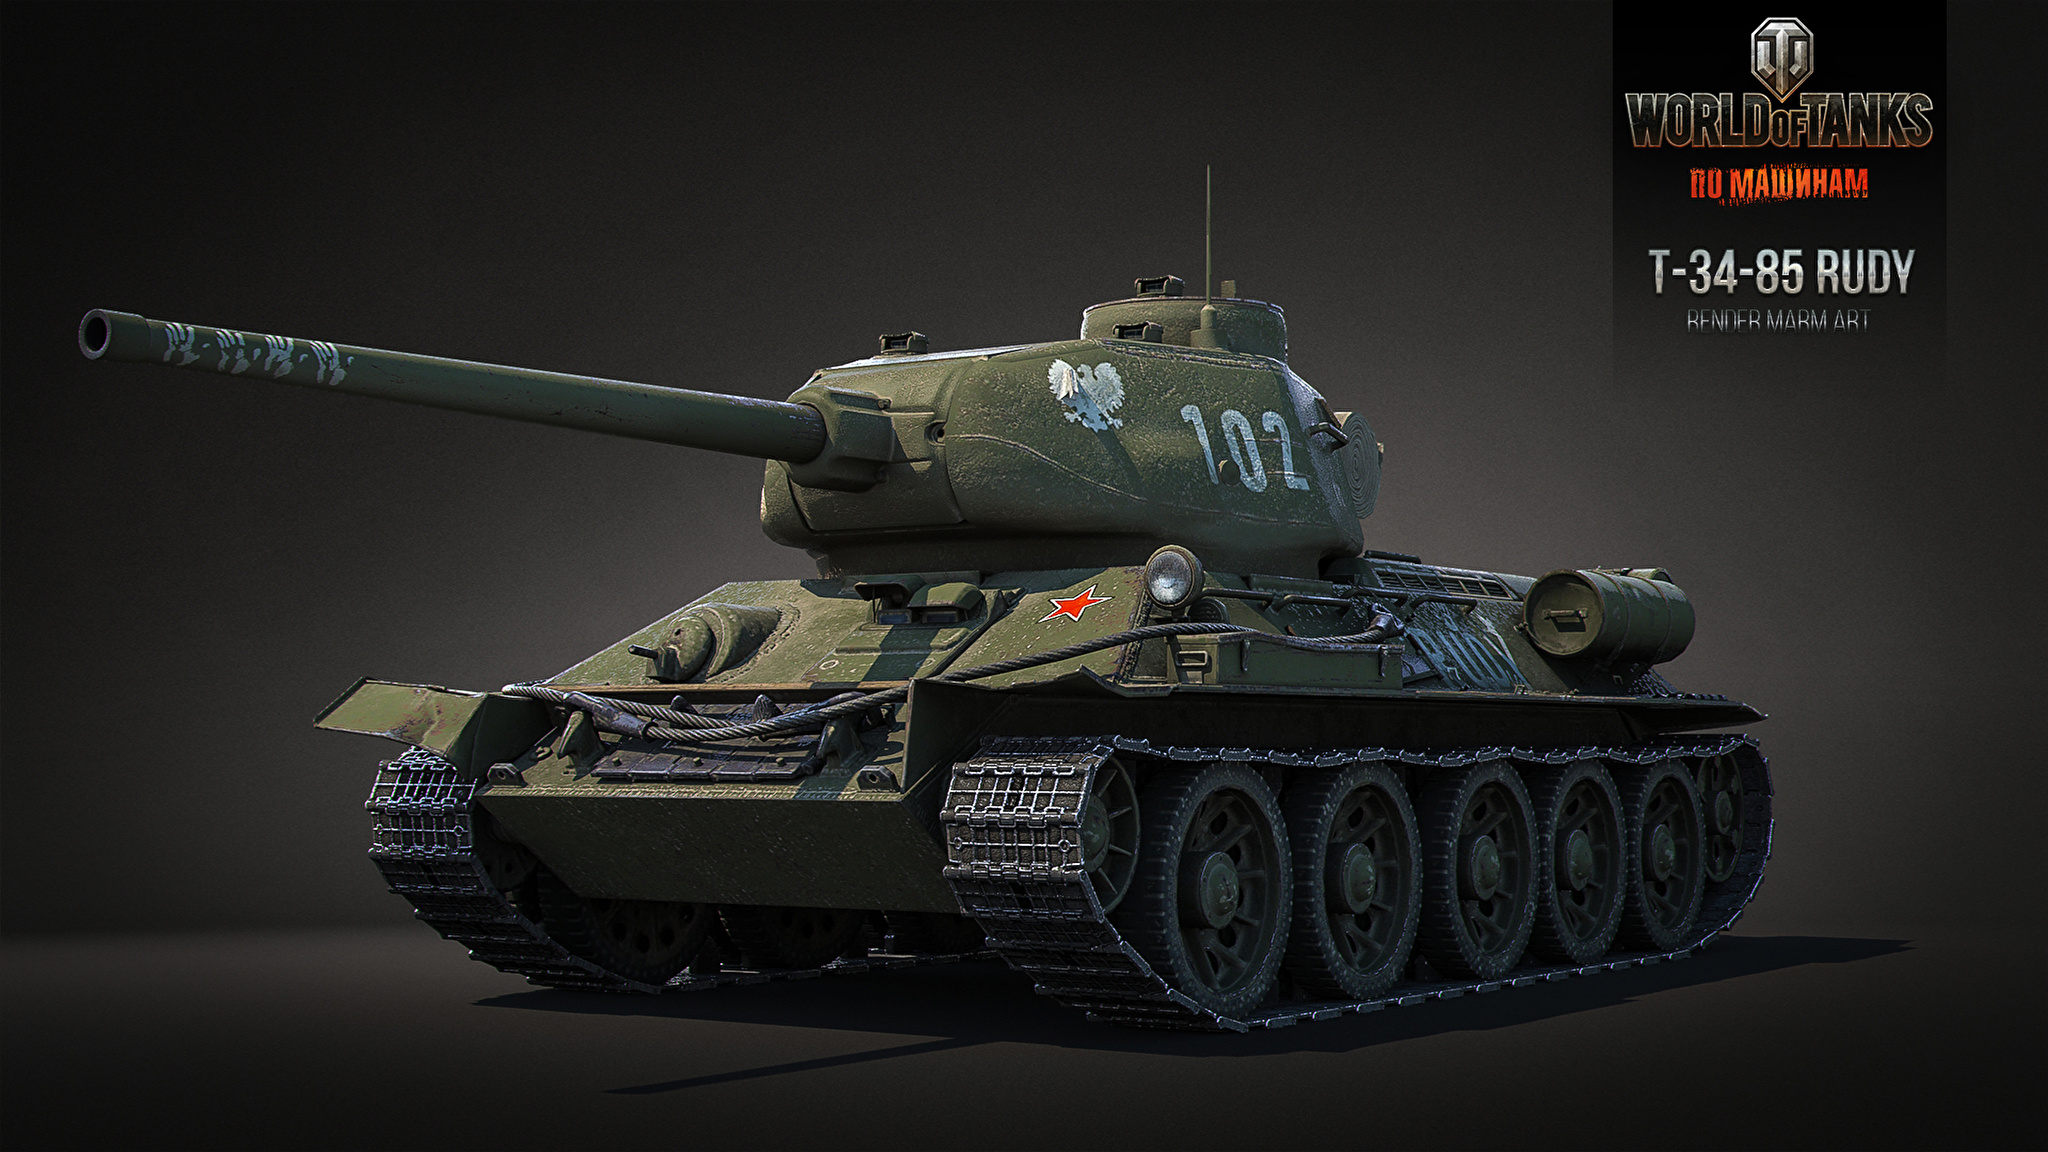 Мир танков советские танки. Т 34 85 Руди. Т-34-85 Rudy танк ворлд оф танк. Т3485 Руди. Т 34 85 Руди World of Tanks.